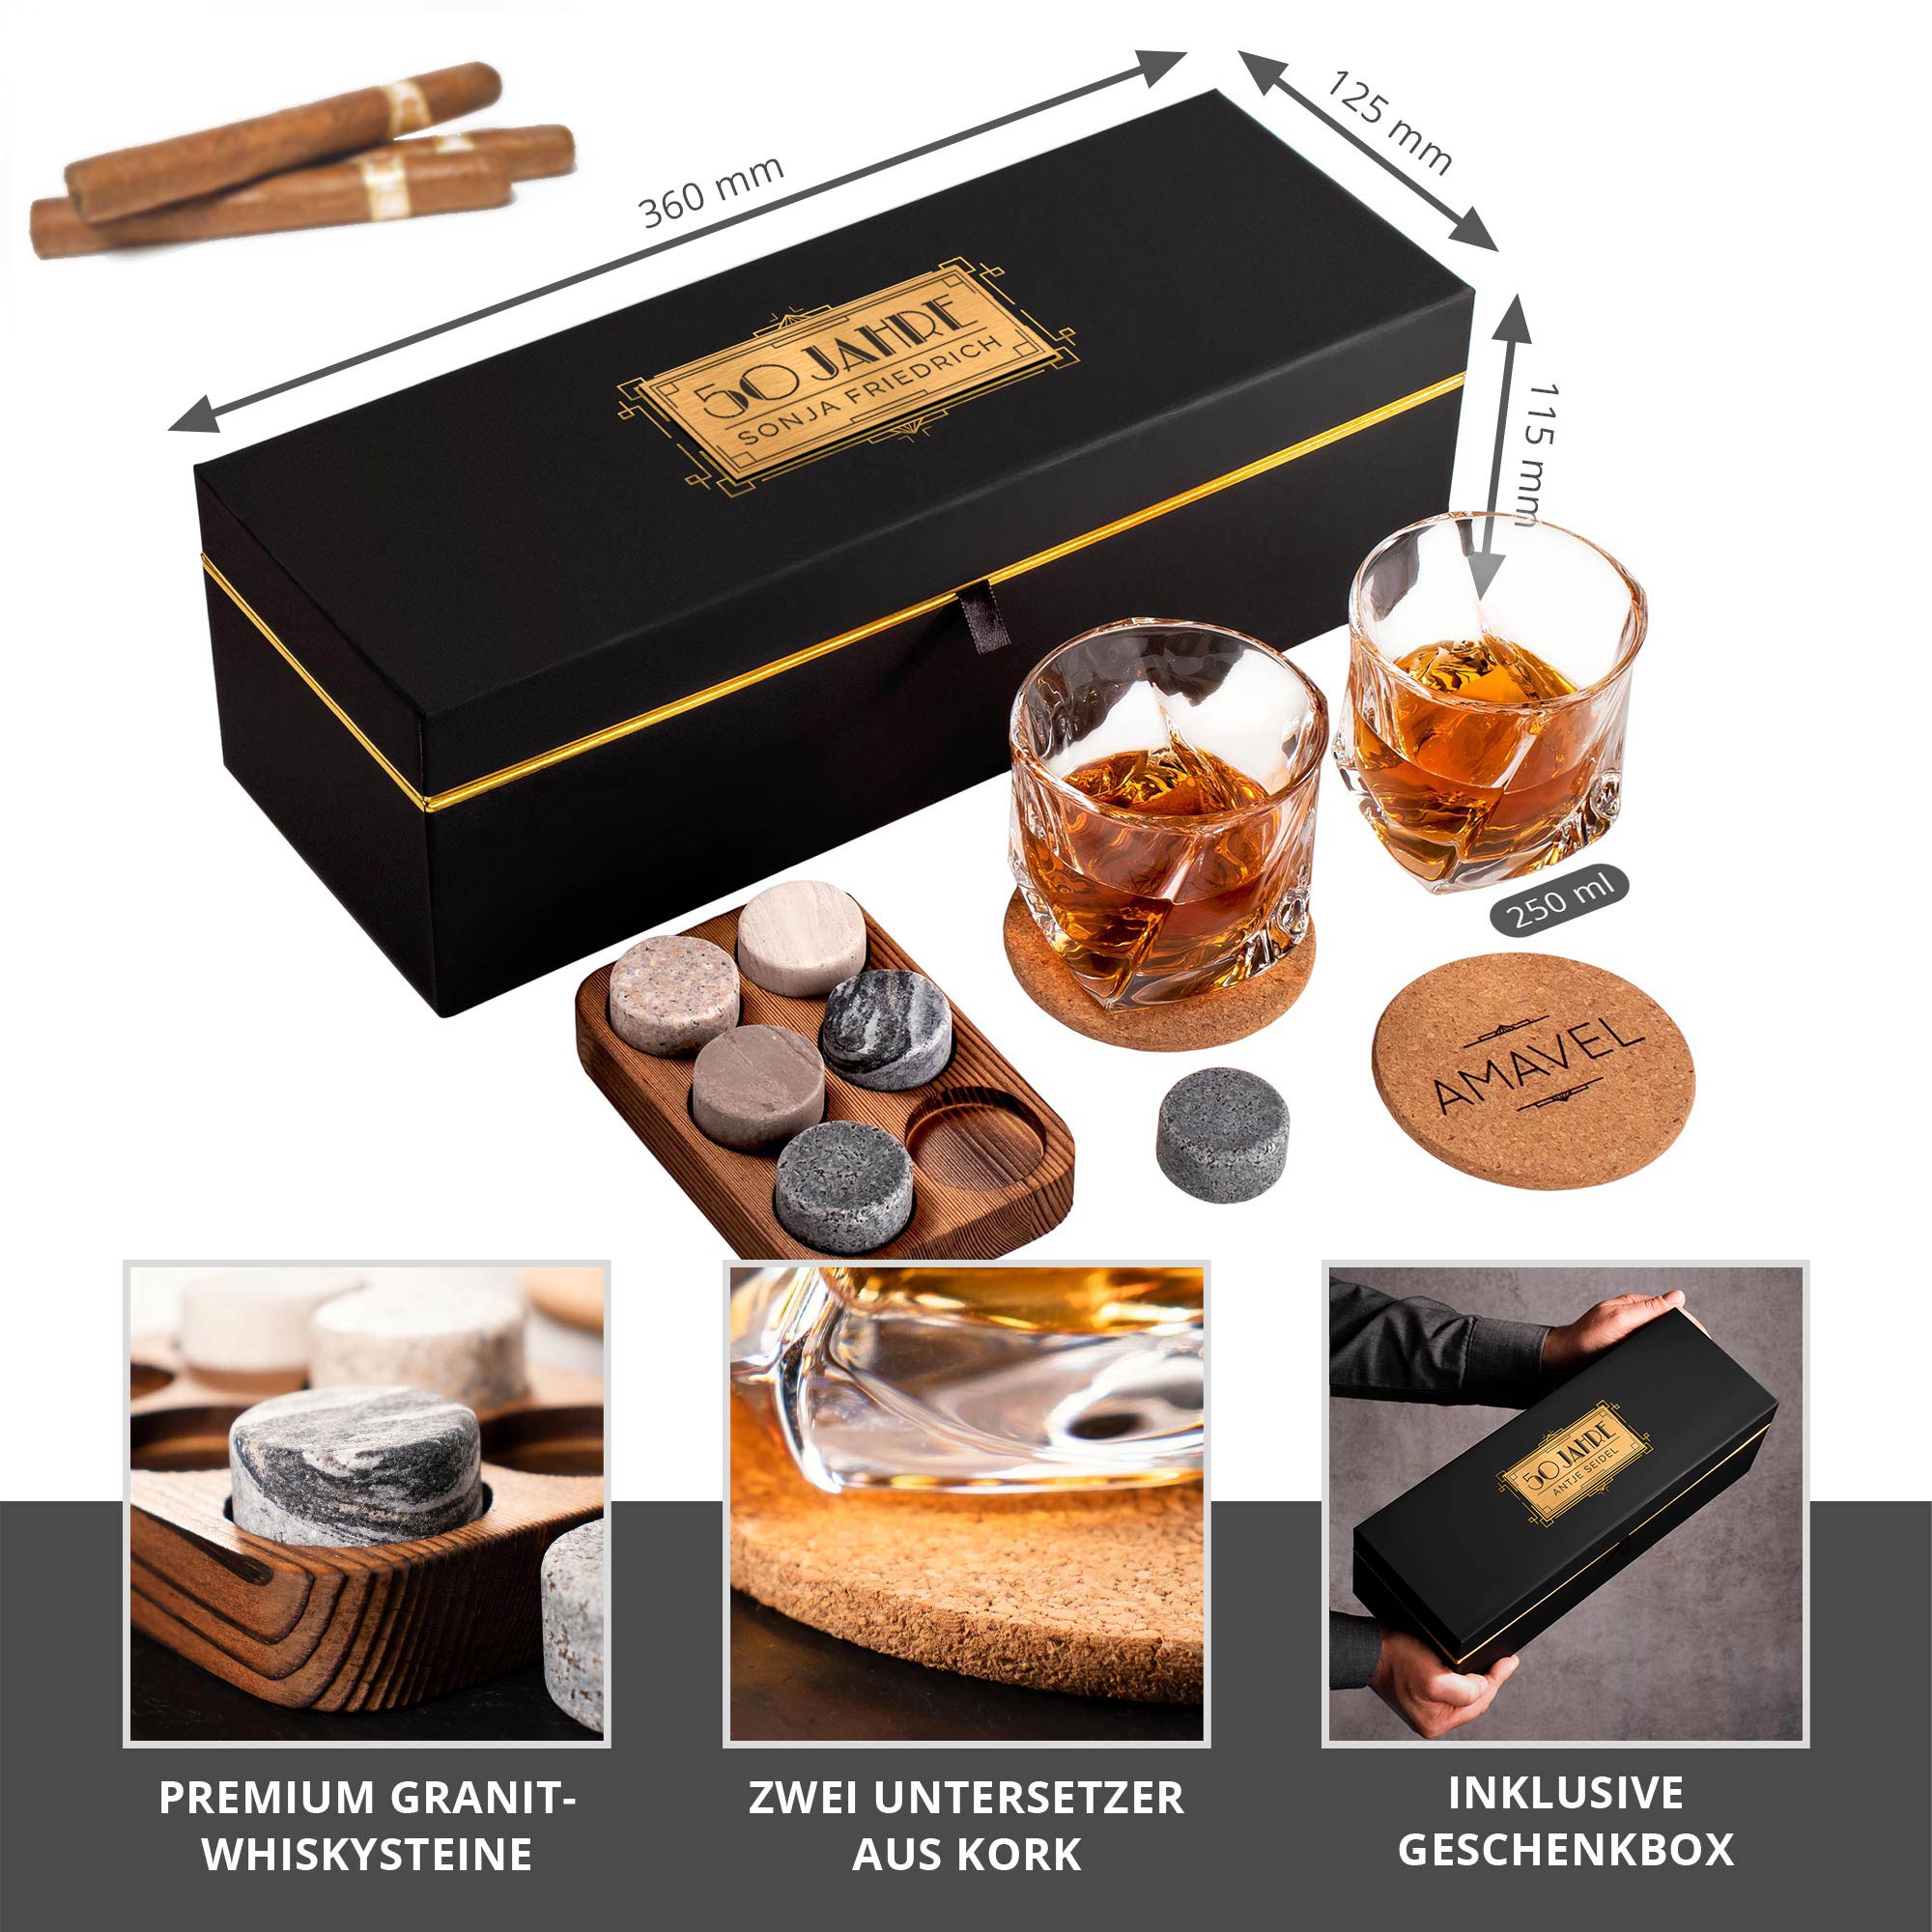 Whisky Set in edler Geschenkbox zum 50. Geburtstag 0021-0002-DE-0005 - 1